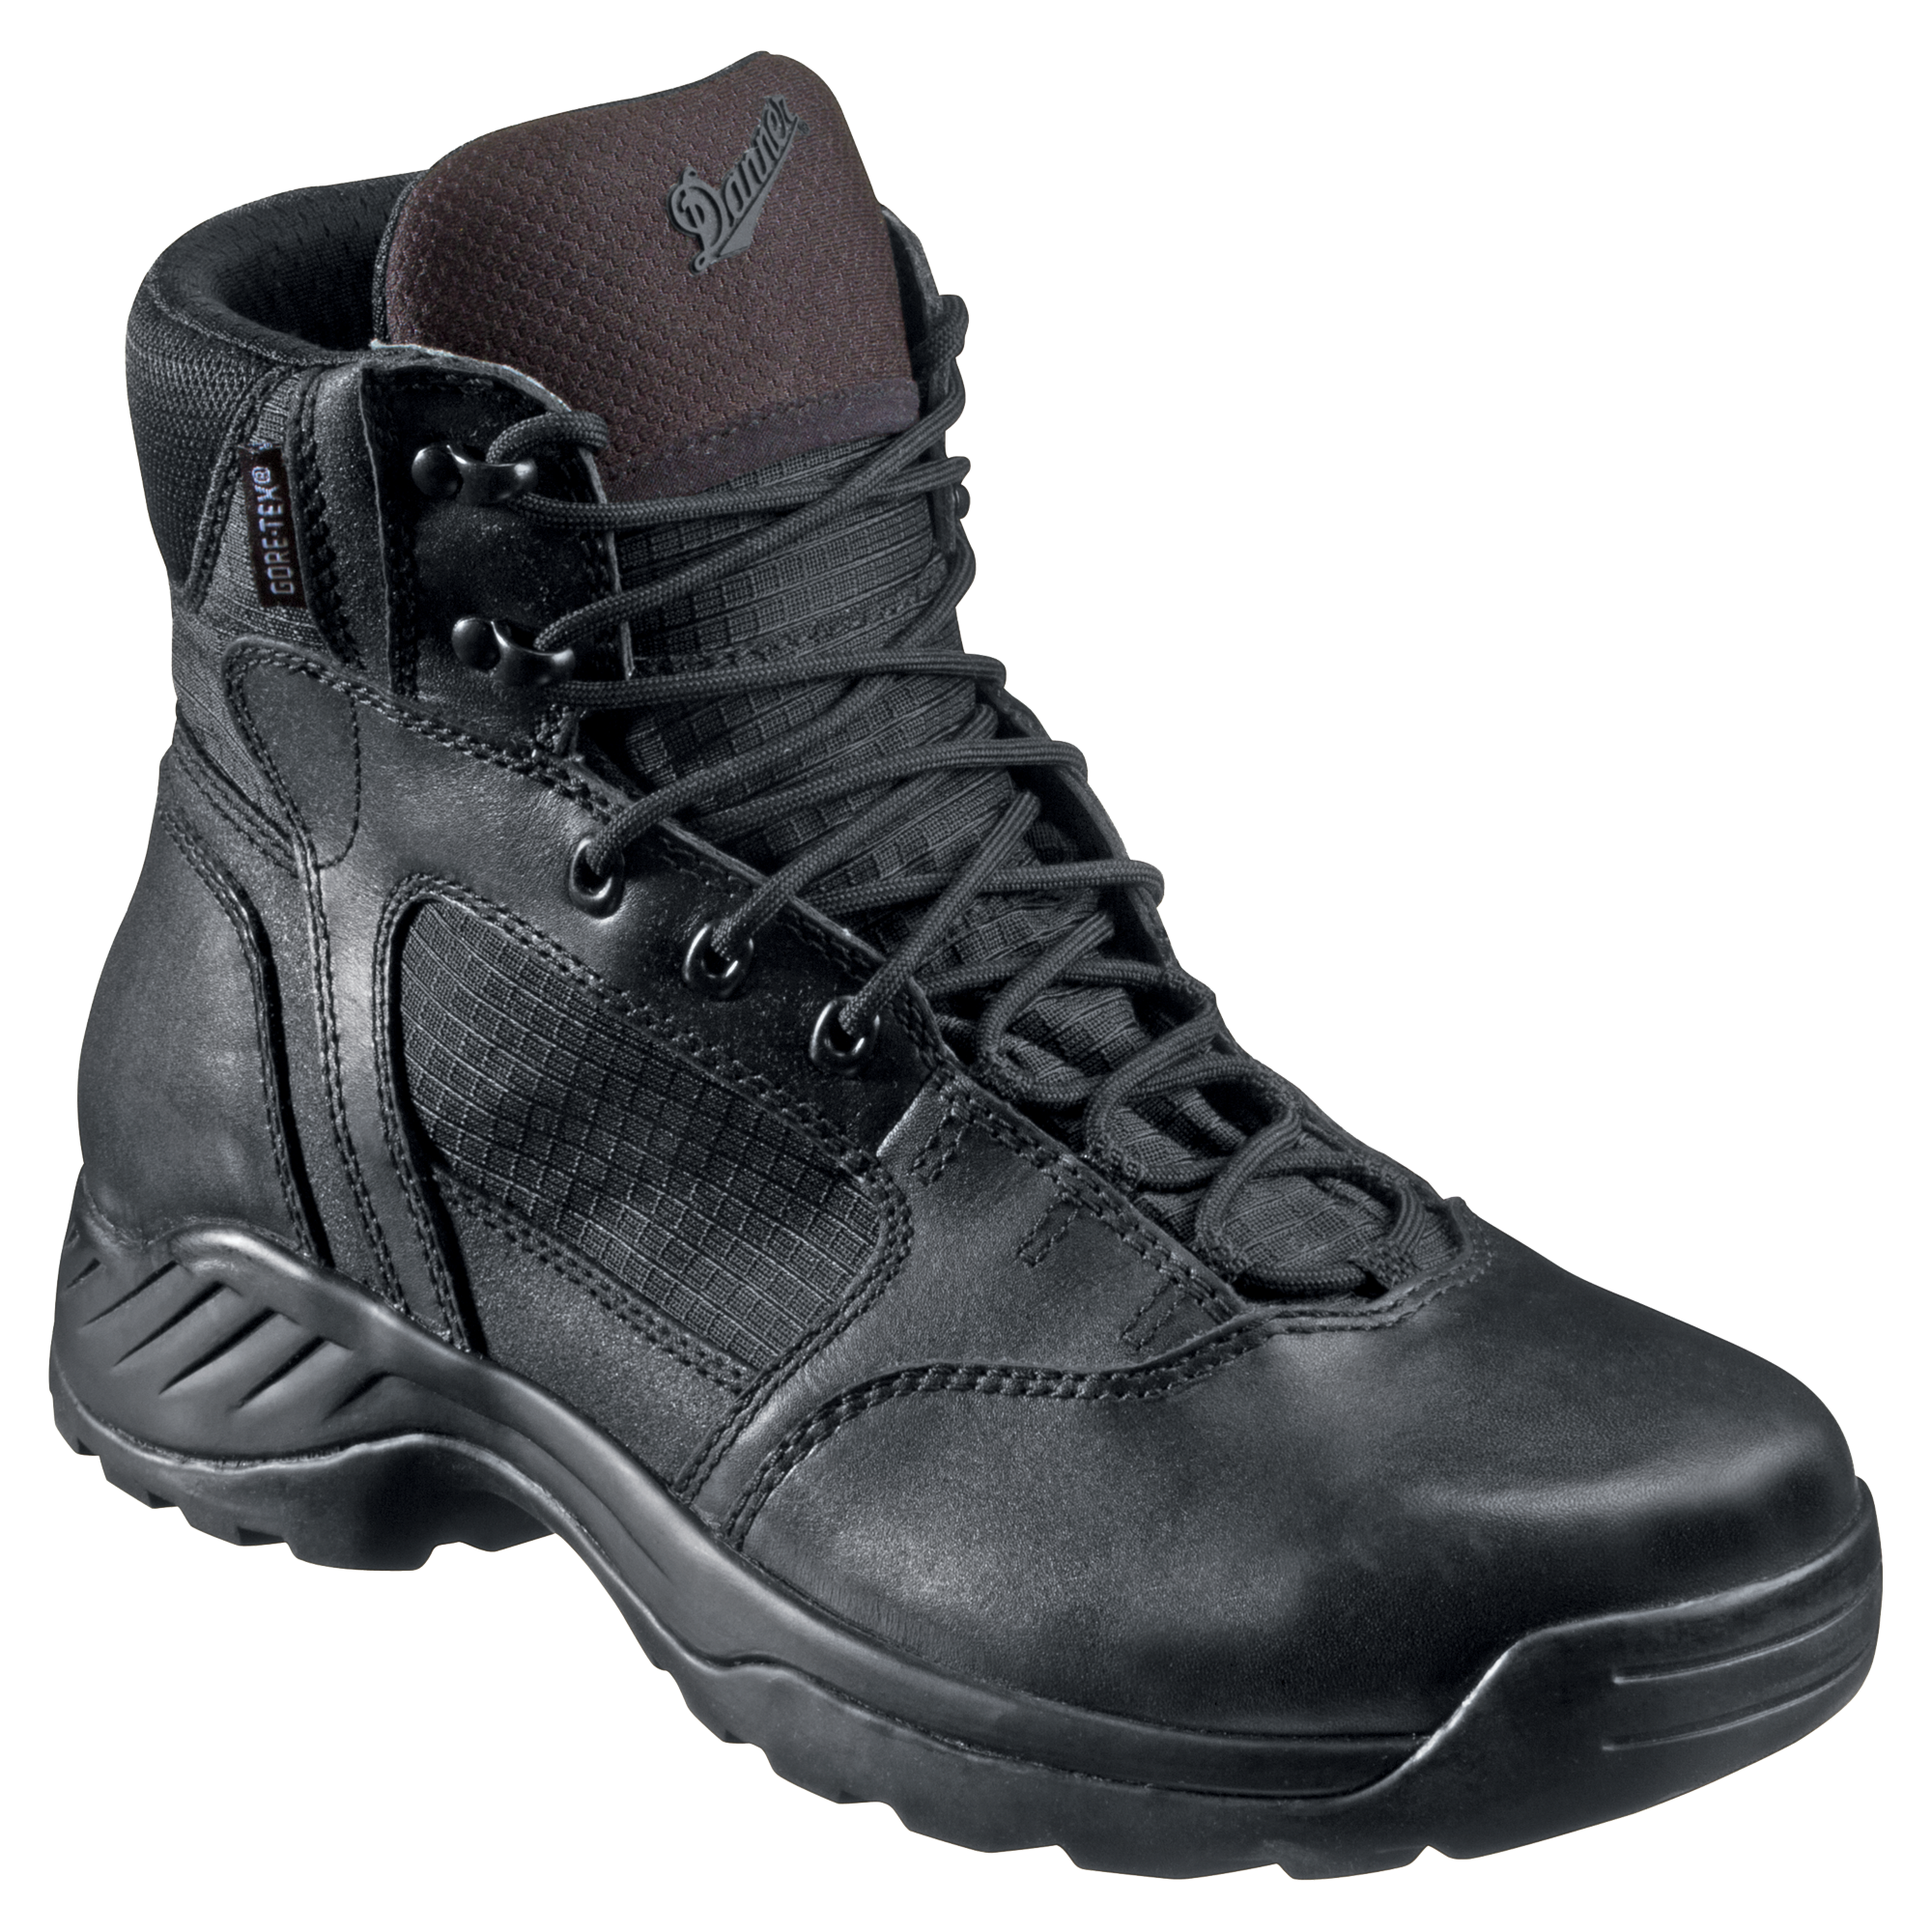 Danner Kinetic Side-Zip GORE-TEX Work Boots for Men - Black - 12M